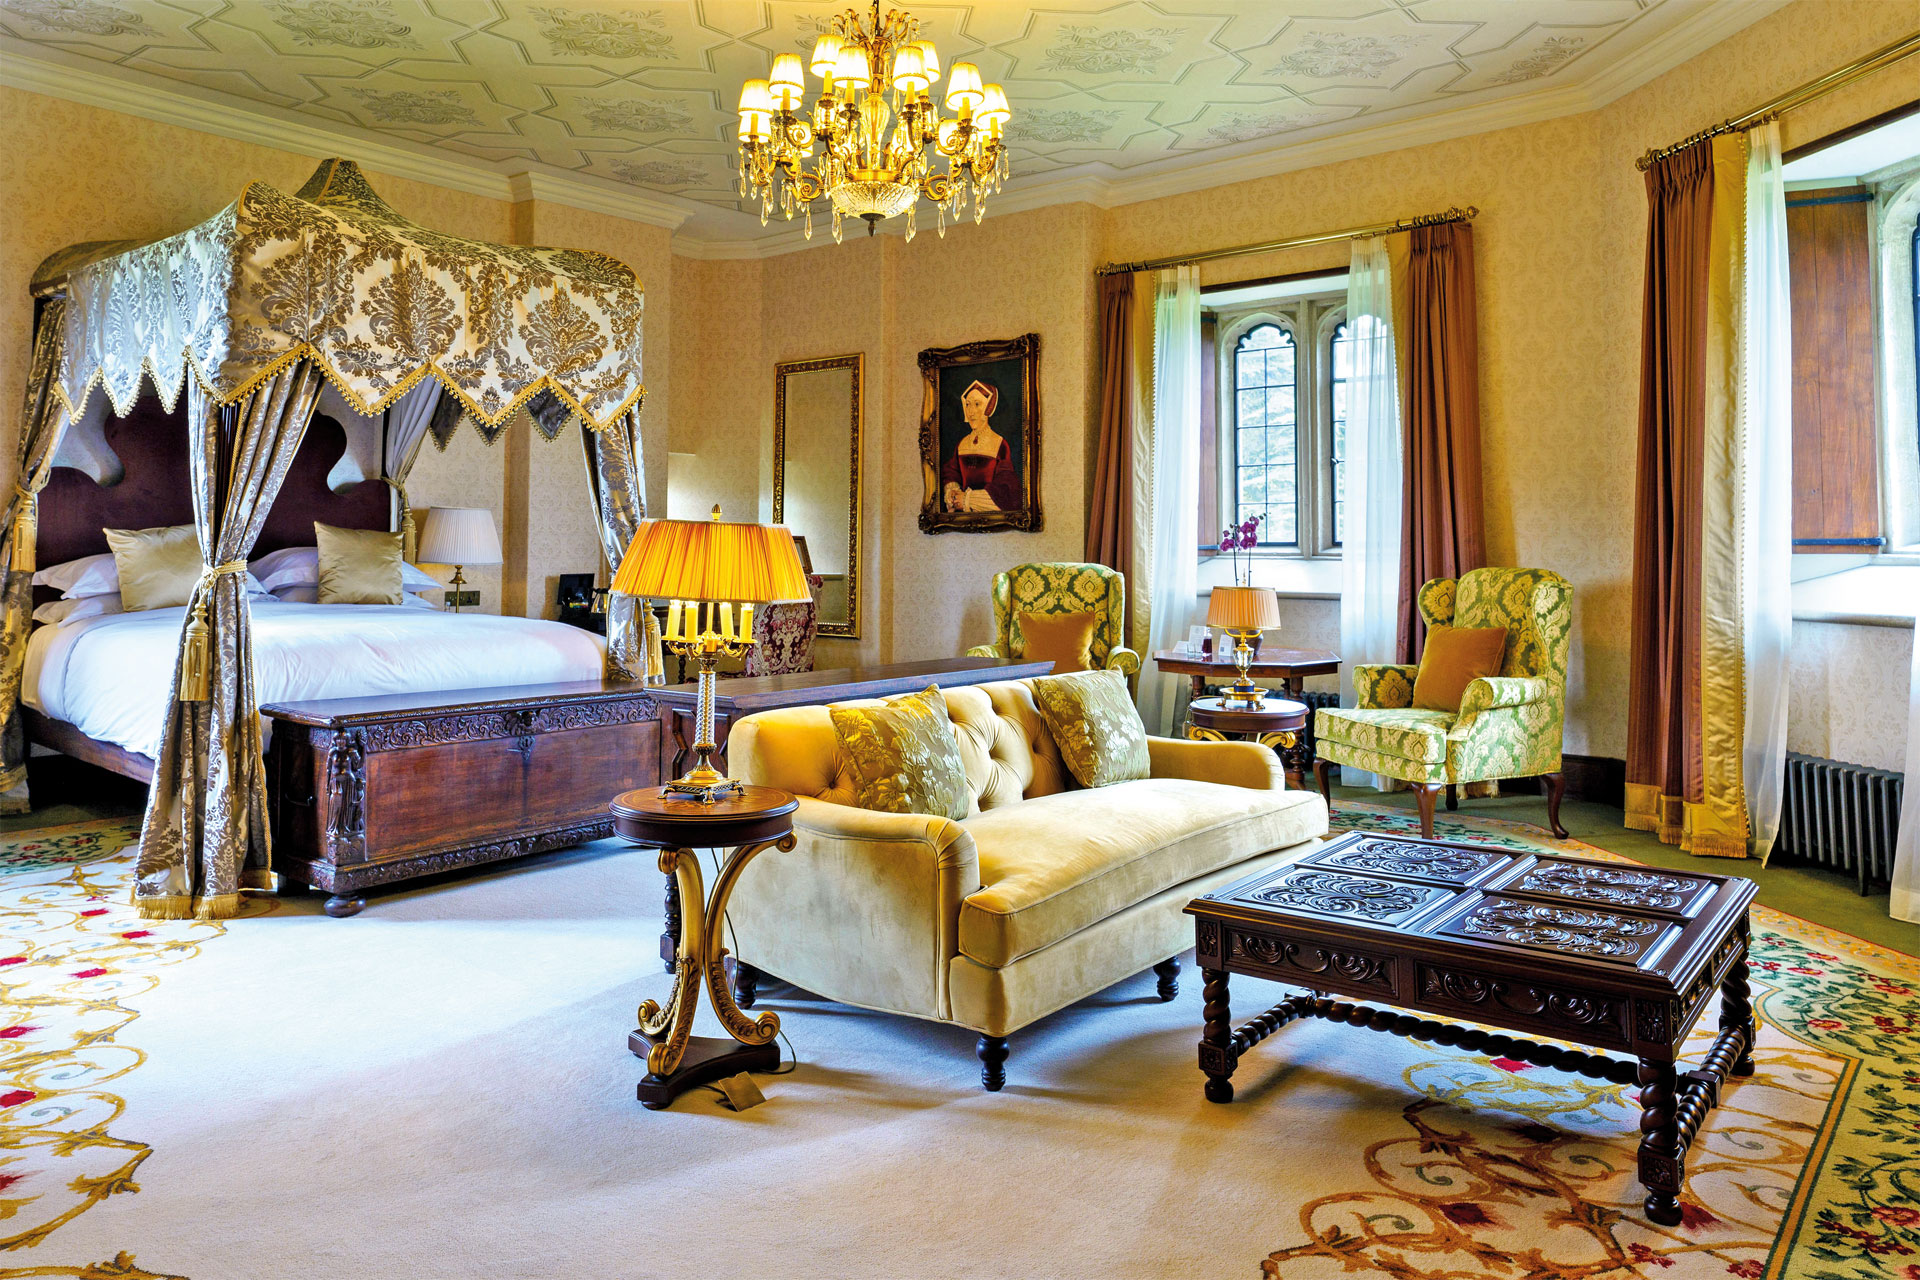 Bedroom suite at Thornbury Castle